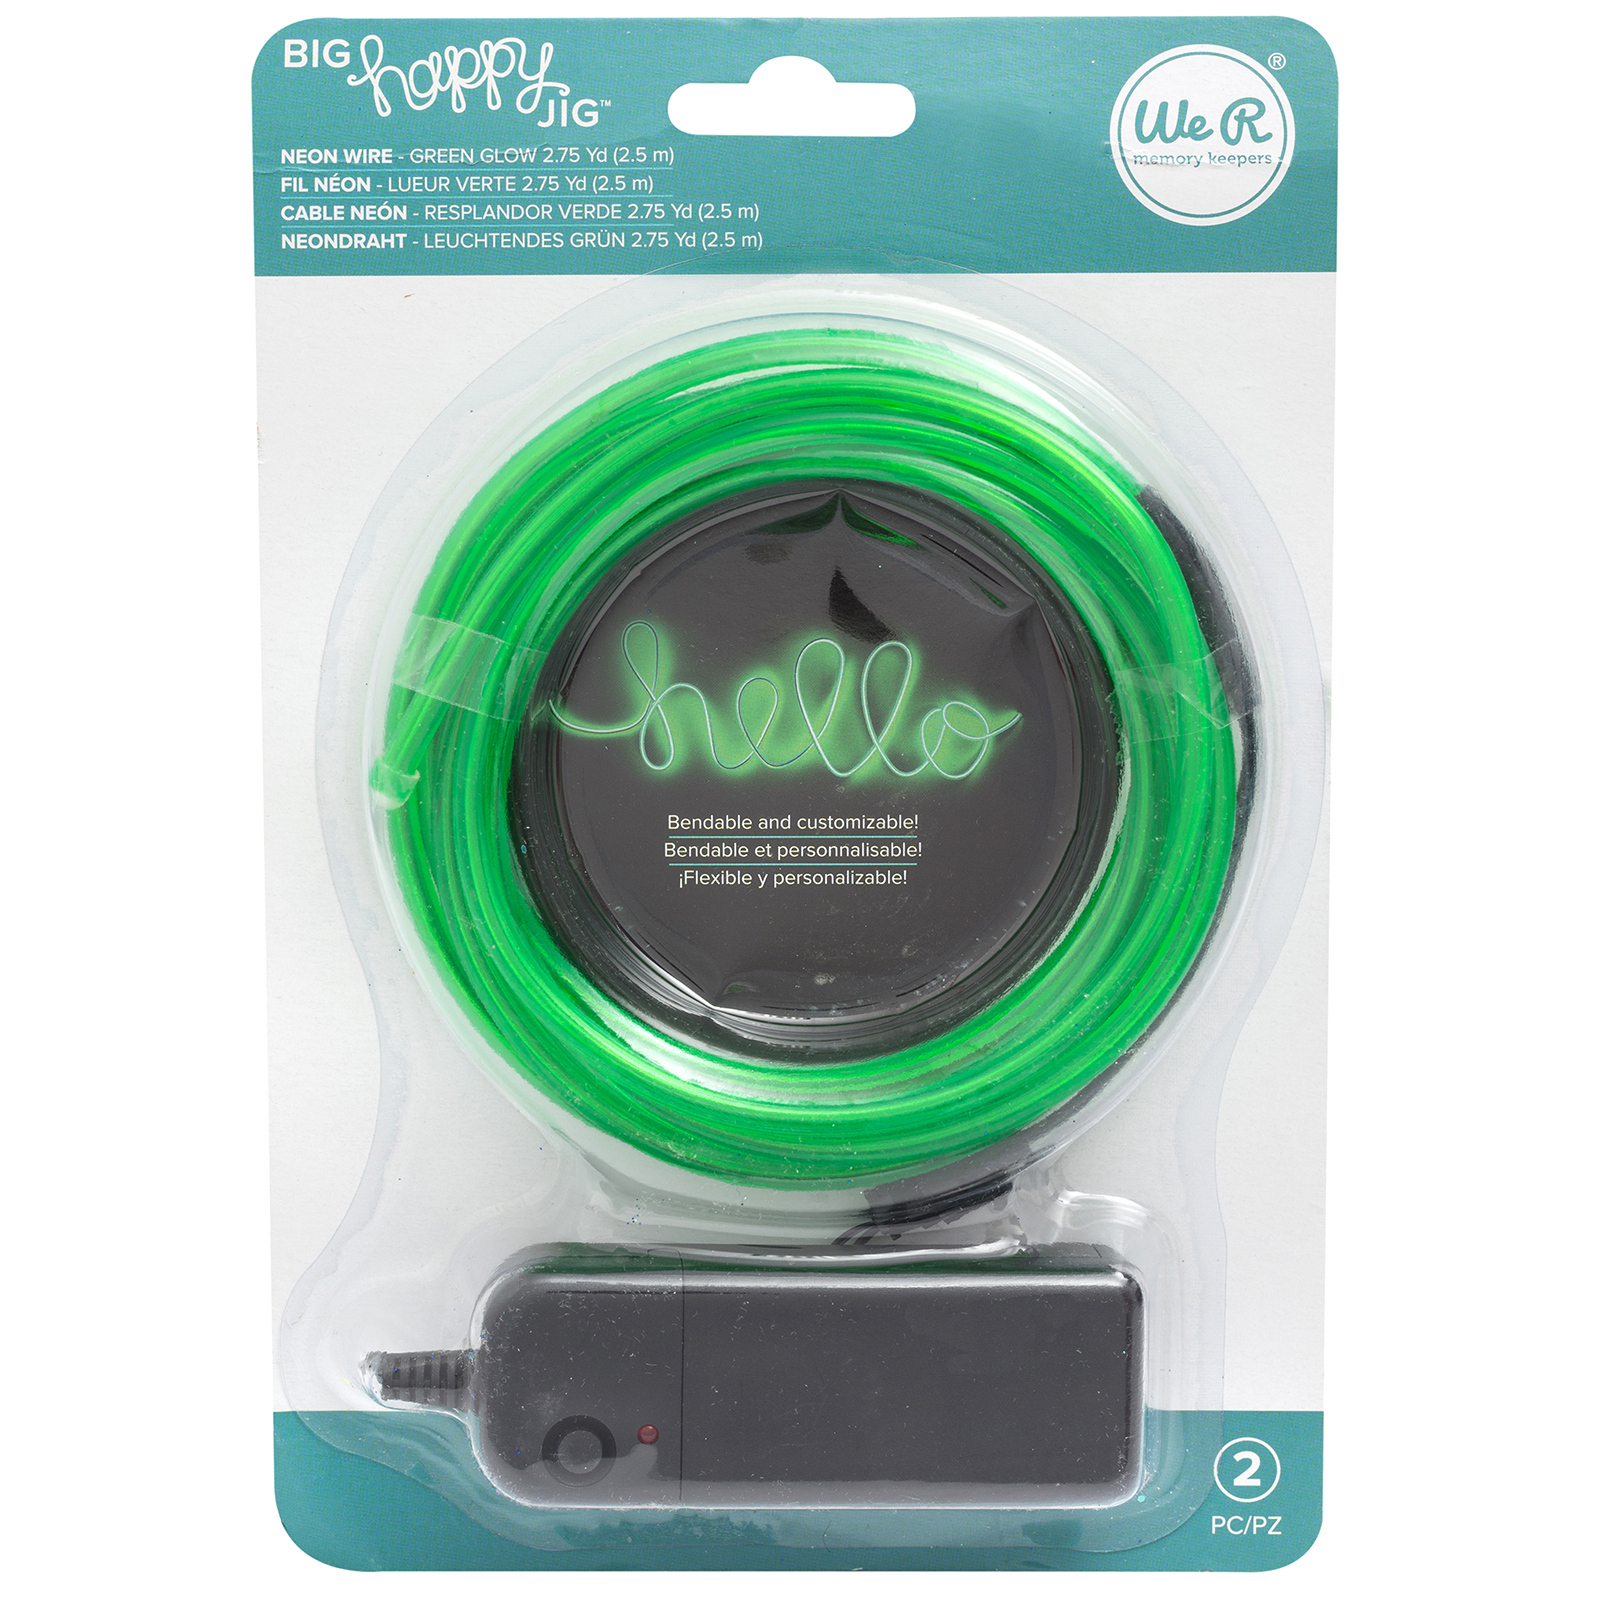 Green Glow - Neon Wire - BIG Happy Jig - We R Memory Keepers